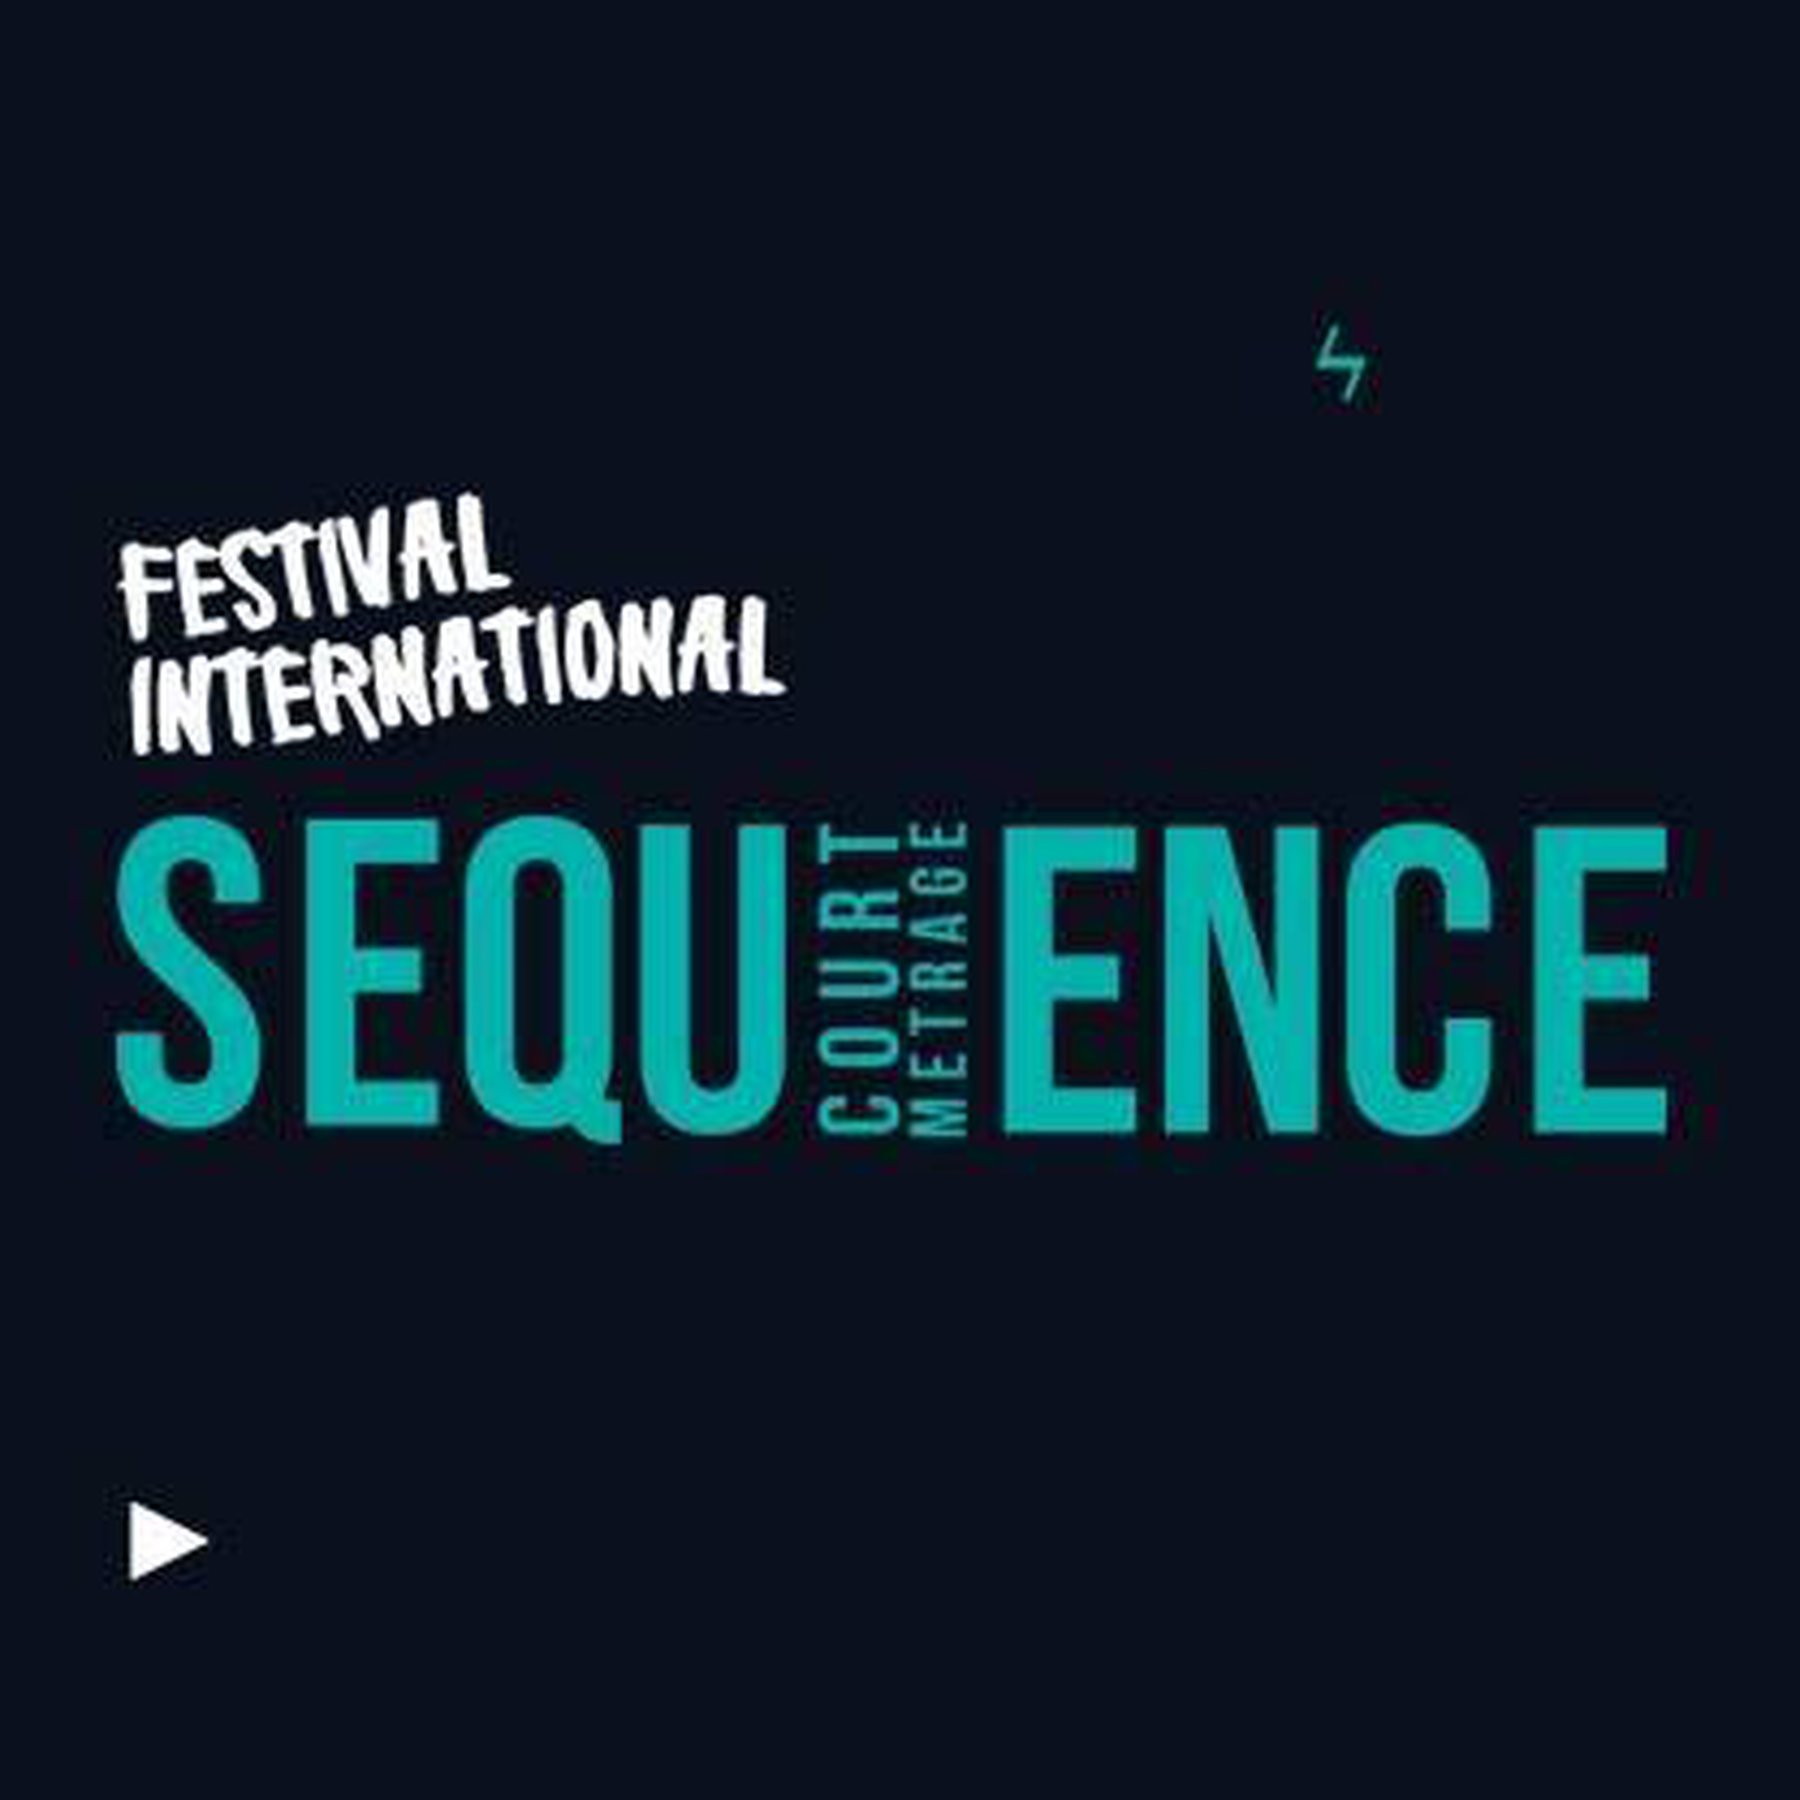 Sequence Short Film Festival